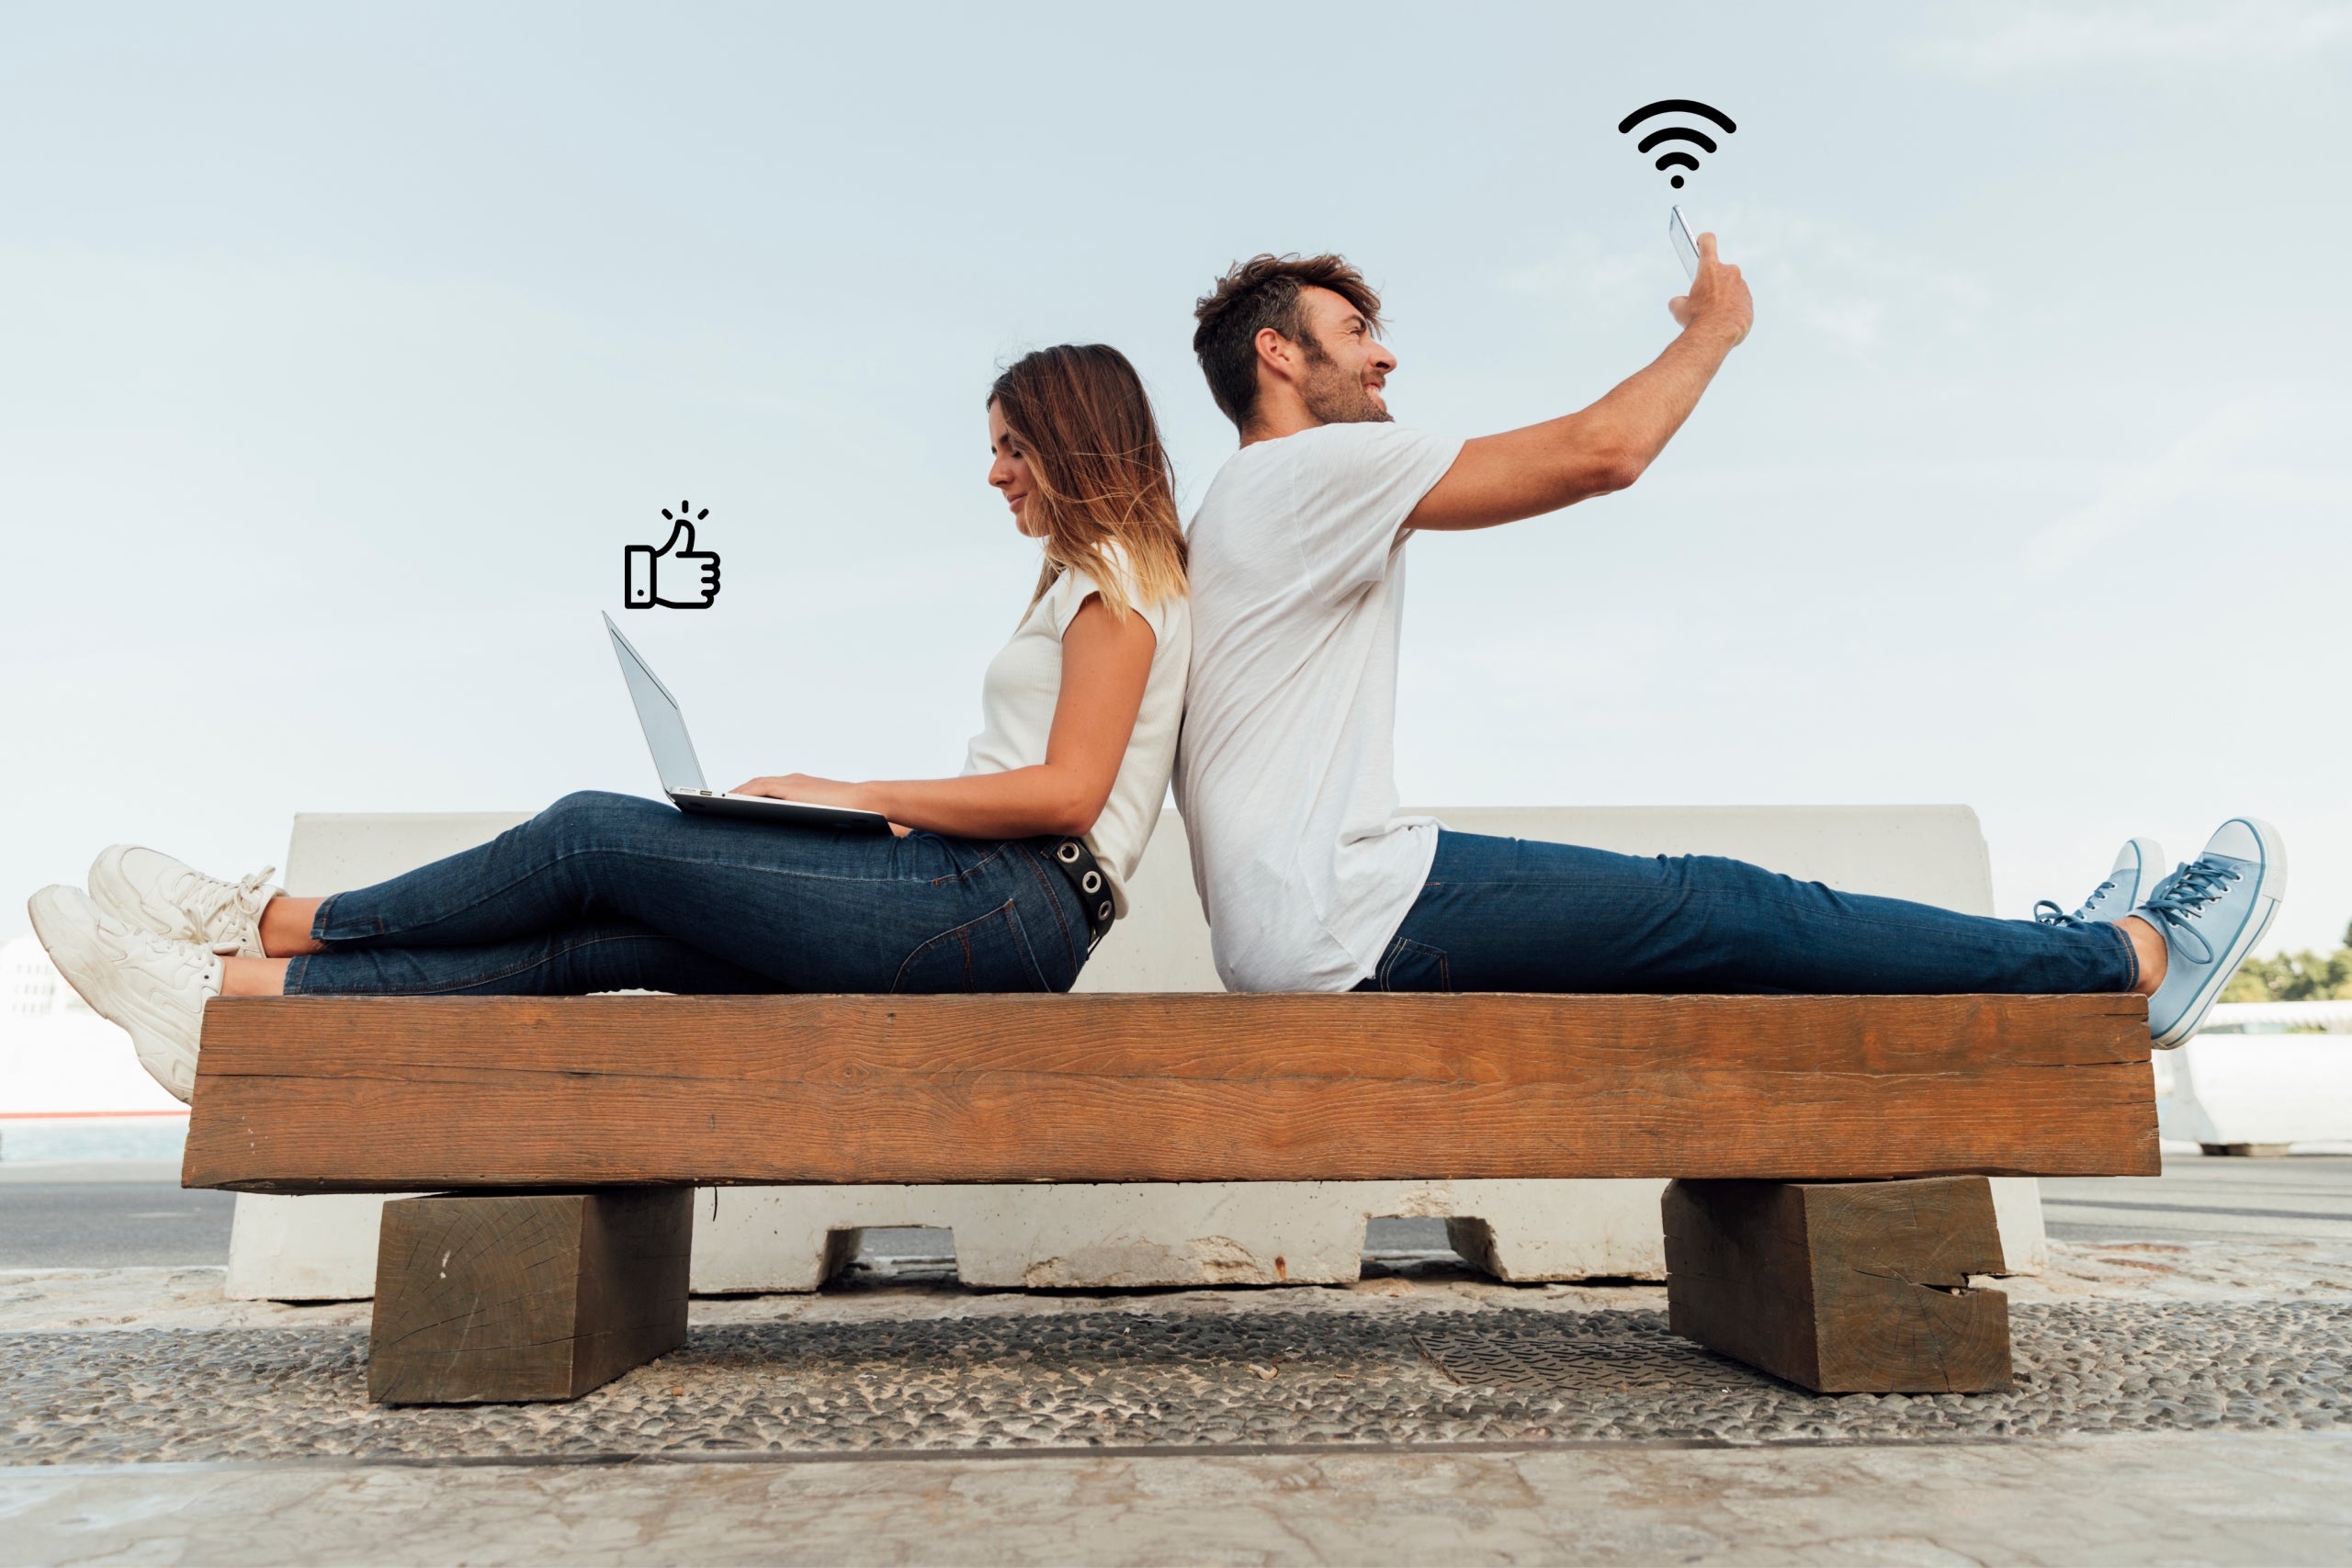 Couple using mobile hotspot